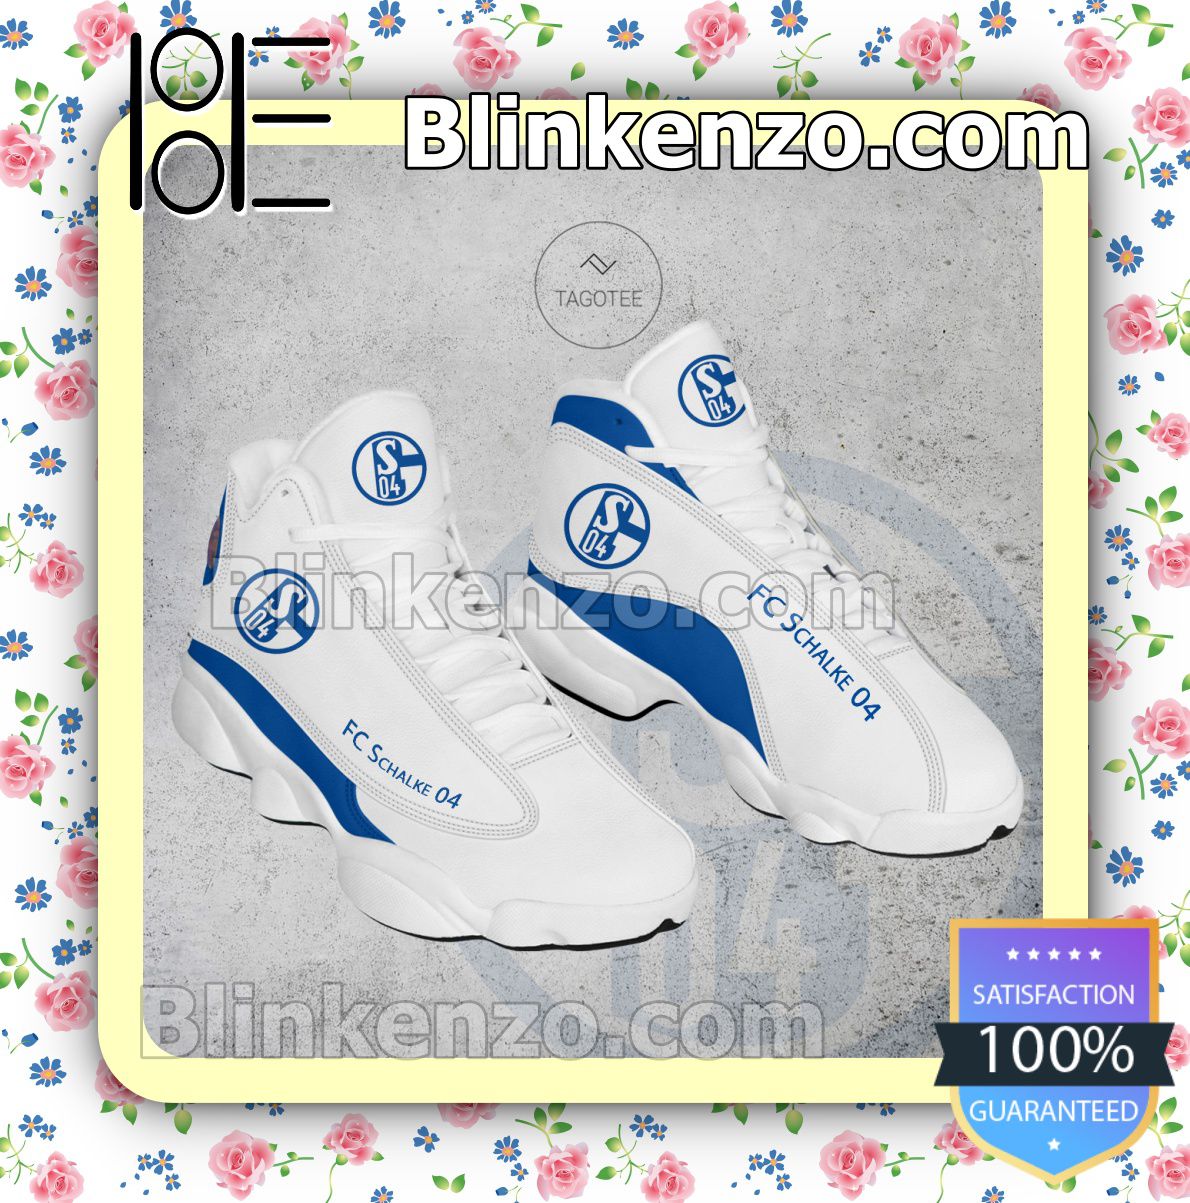 Louis Vuitton LV Monogram Blue Air Jordan High Top Shoes Sneakers - Tagotee